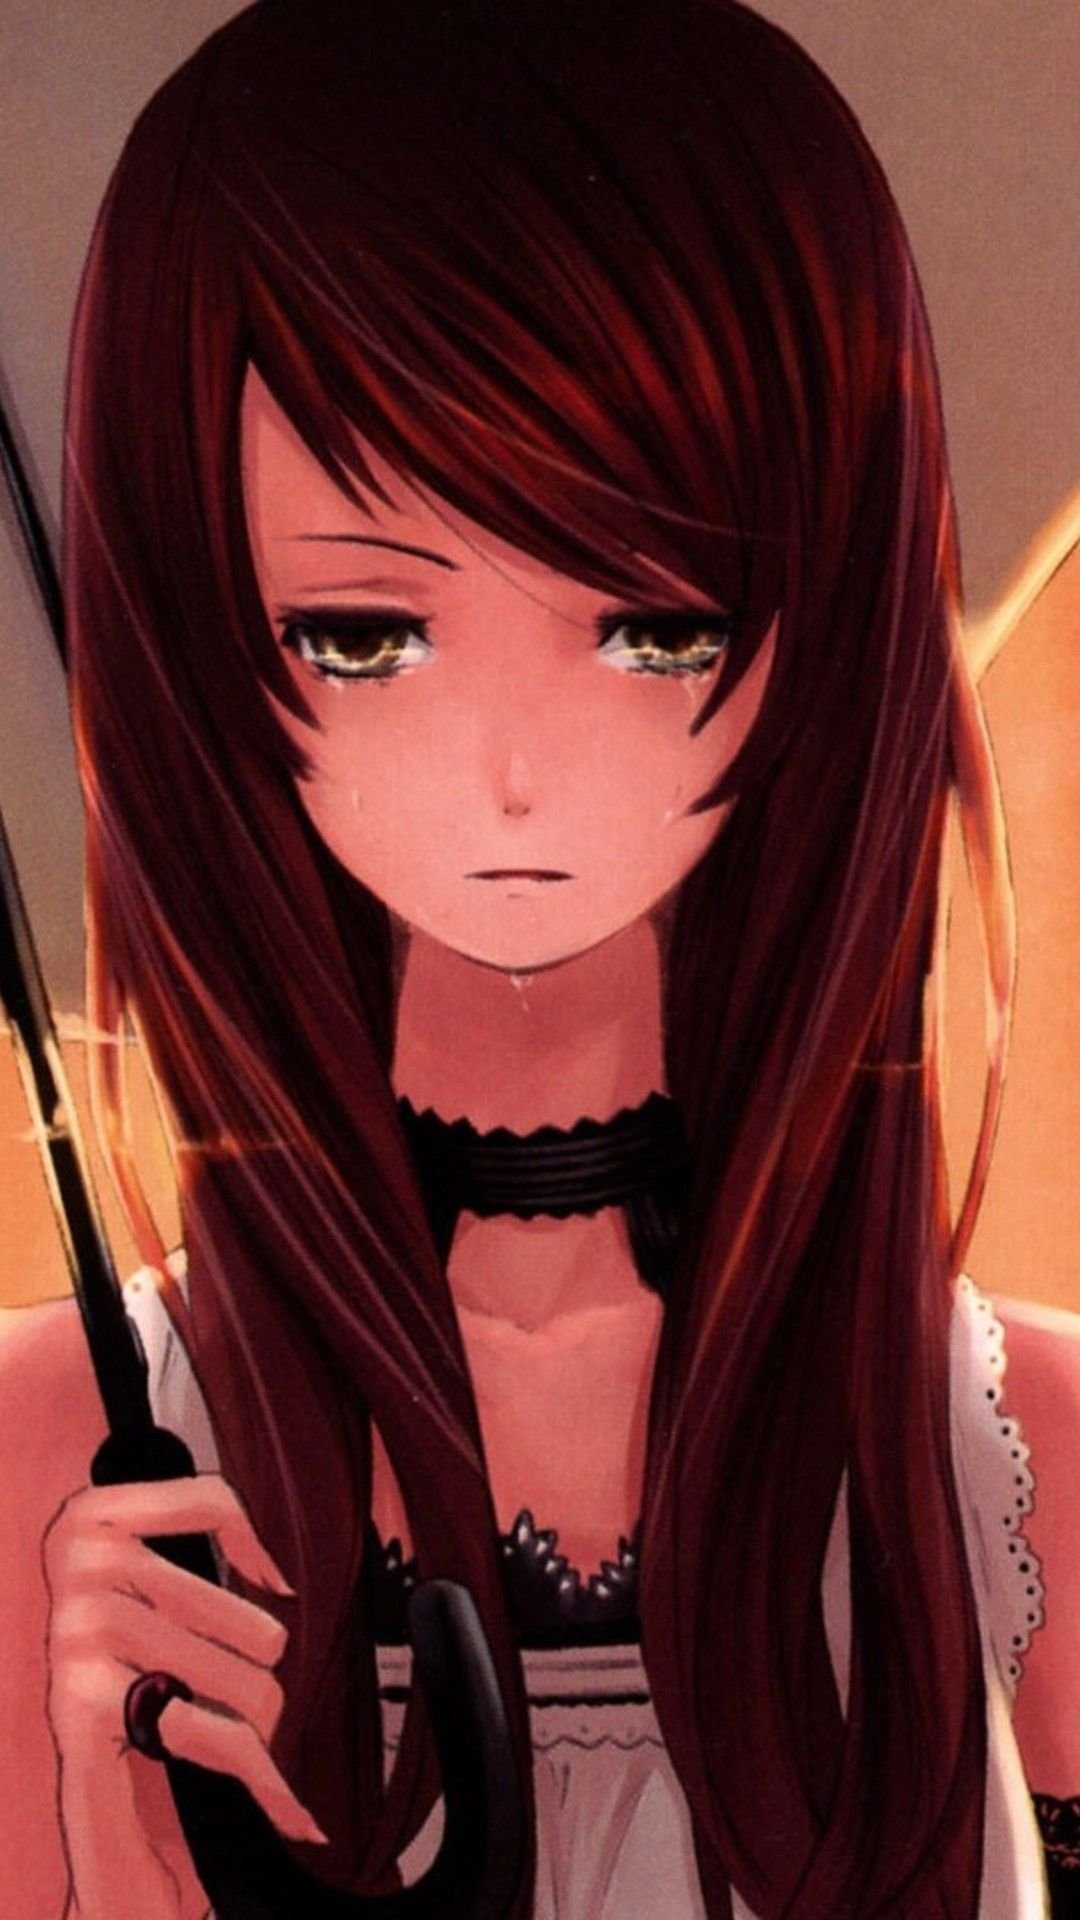 Depressing - Anime - Girl - Sad Wallpaper Download | MobCup-demhanvico.com.vn